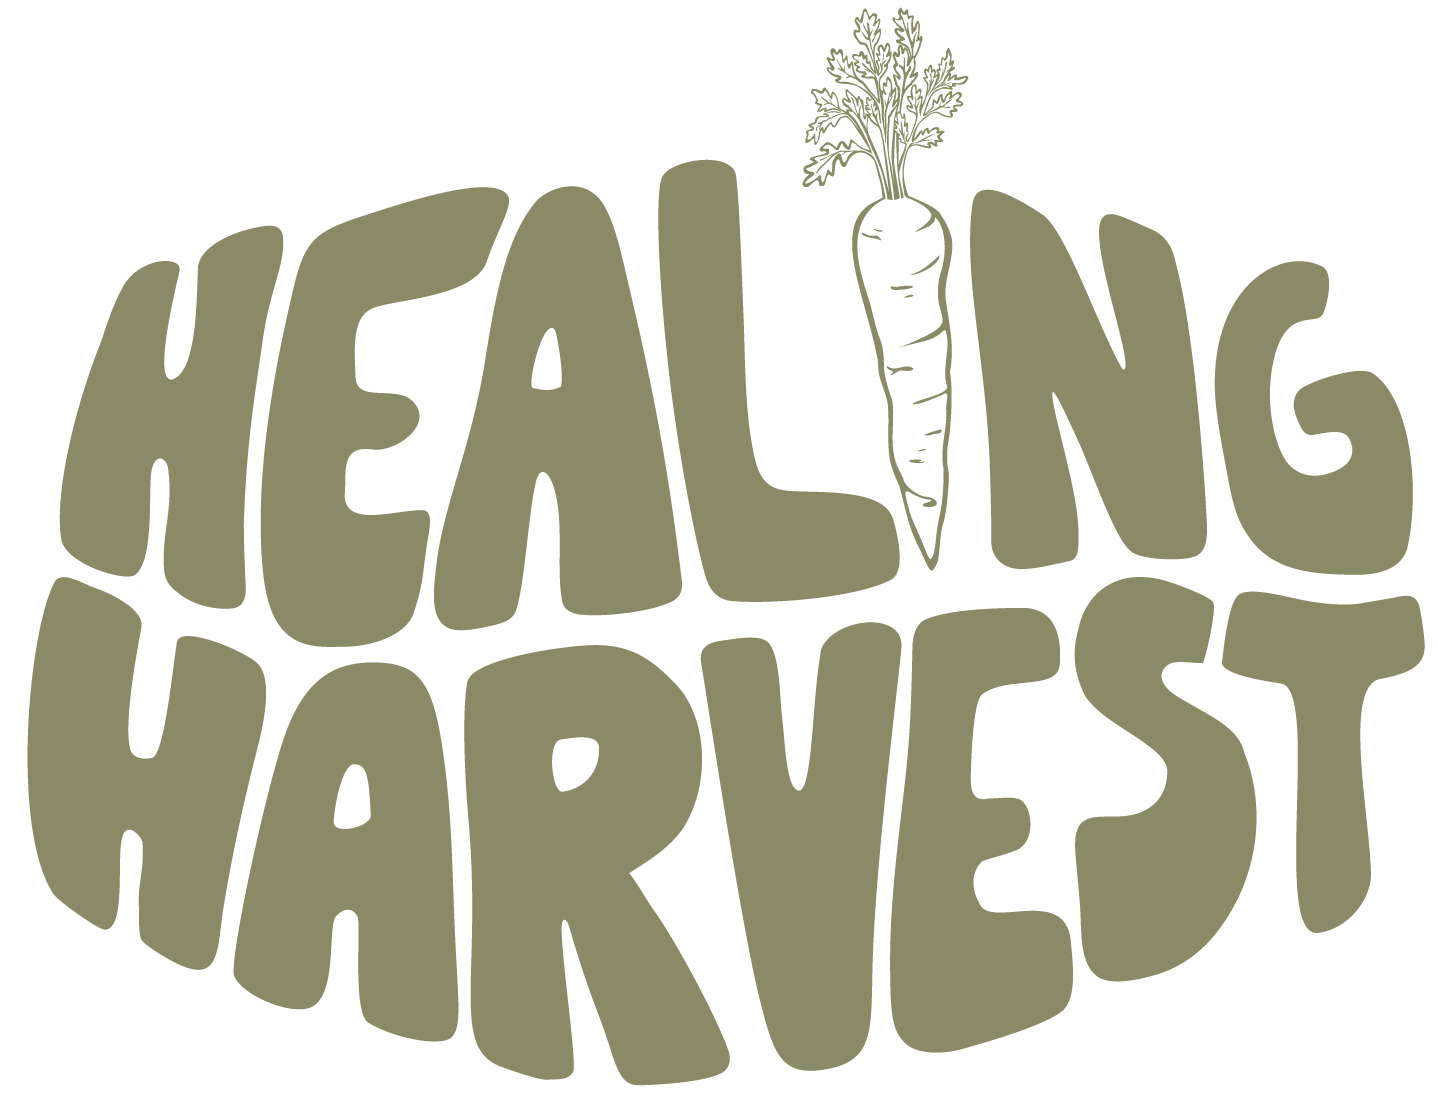 Healing Harvest